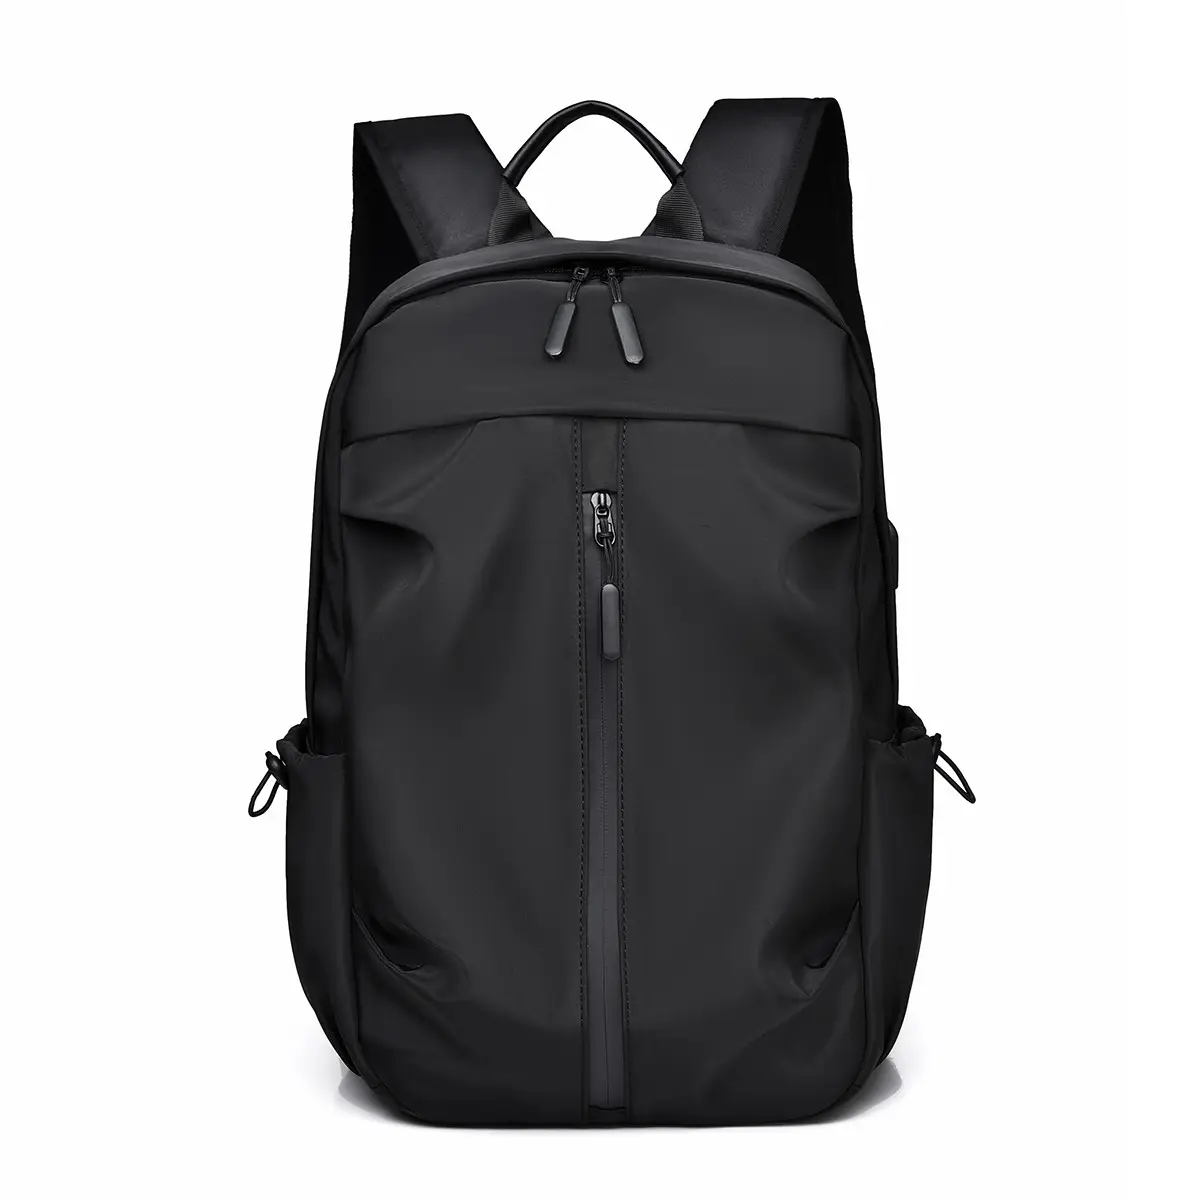 New leather film fabric laptop backpack simple large capacity sports computer shoulder bag multifunctional waterproof bag